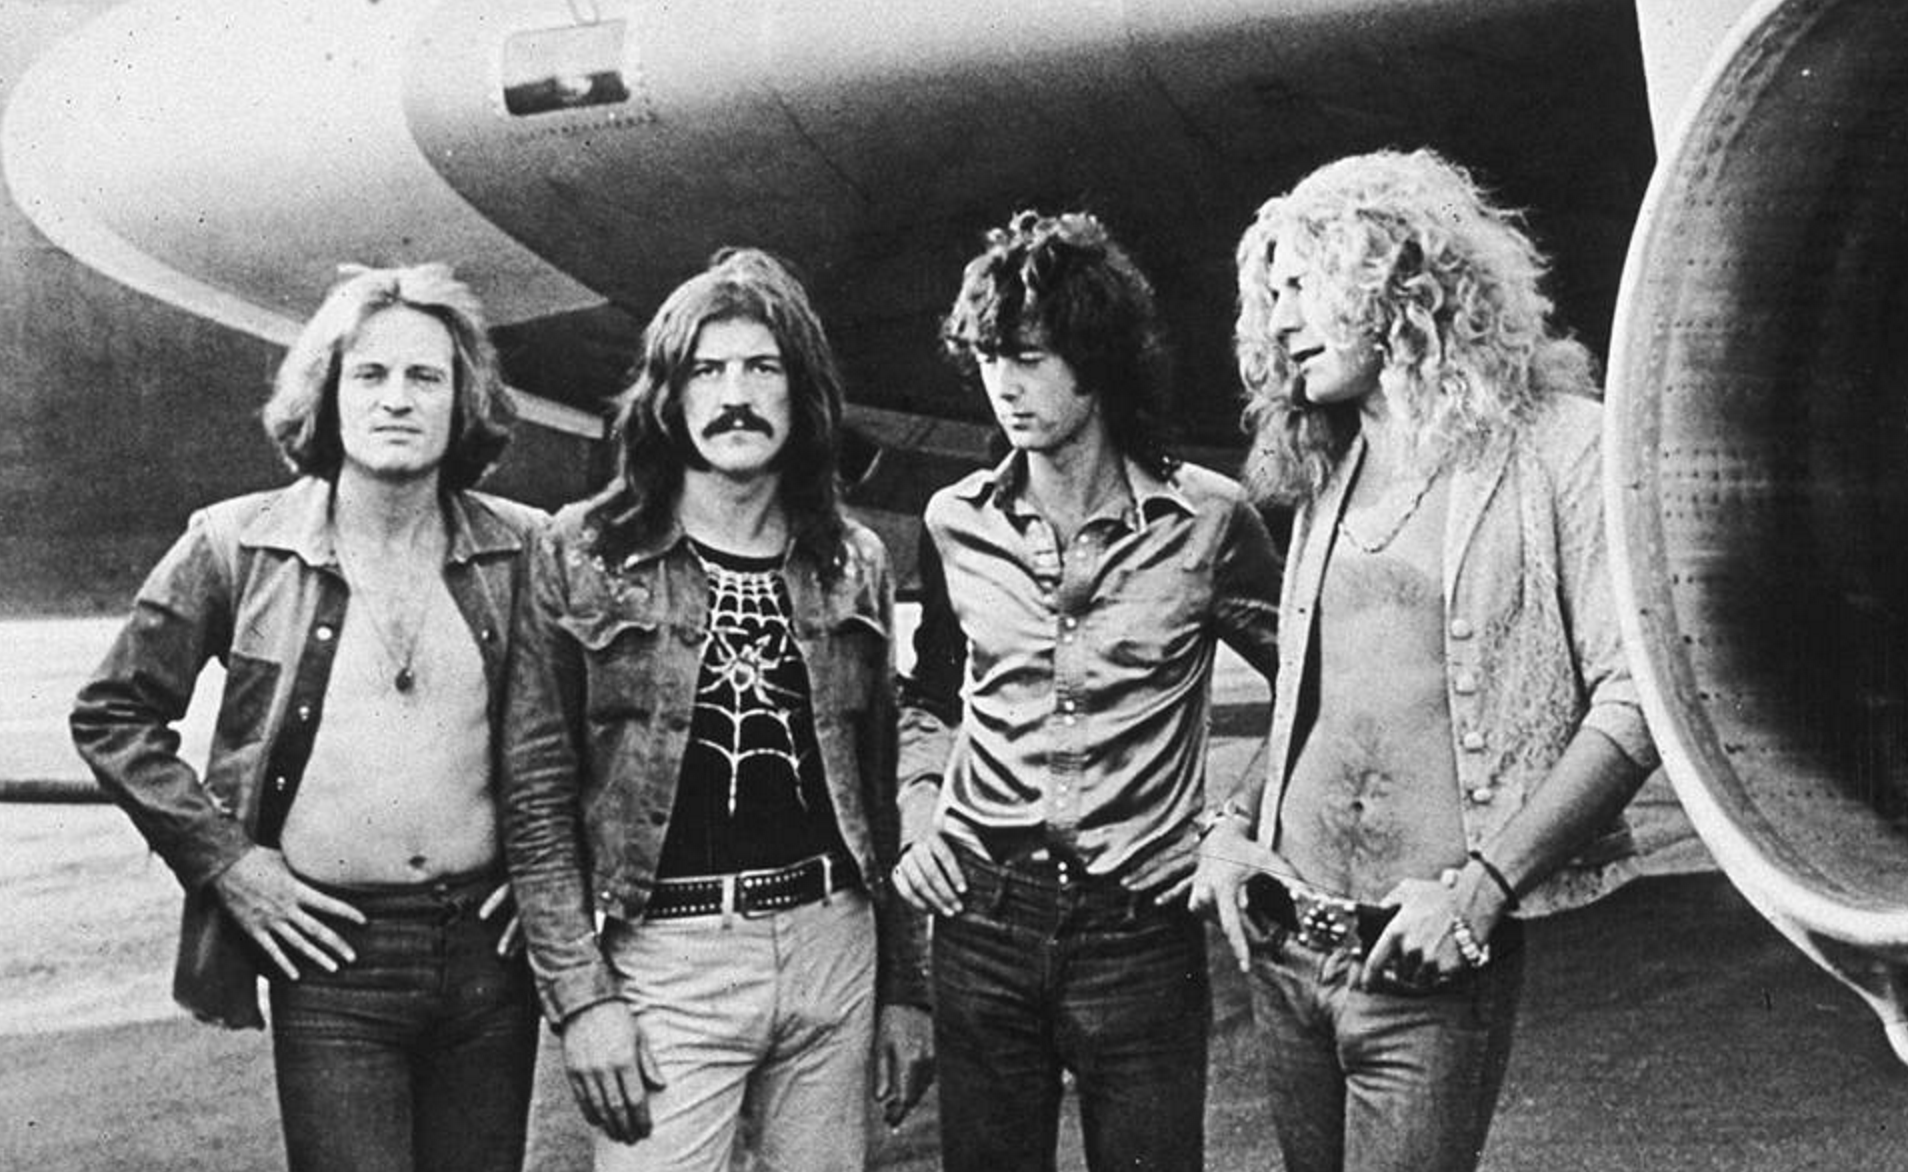 Mastodon คัฟเวอร์เพลง "Stairway To Heaven" งานคลาสสิกของ Led Zeppelin